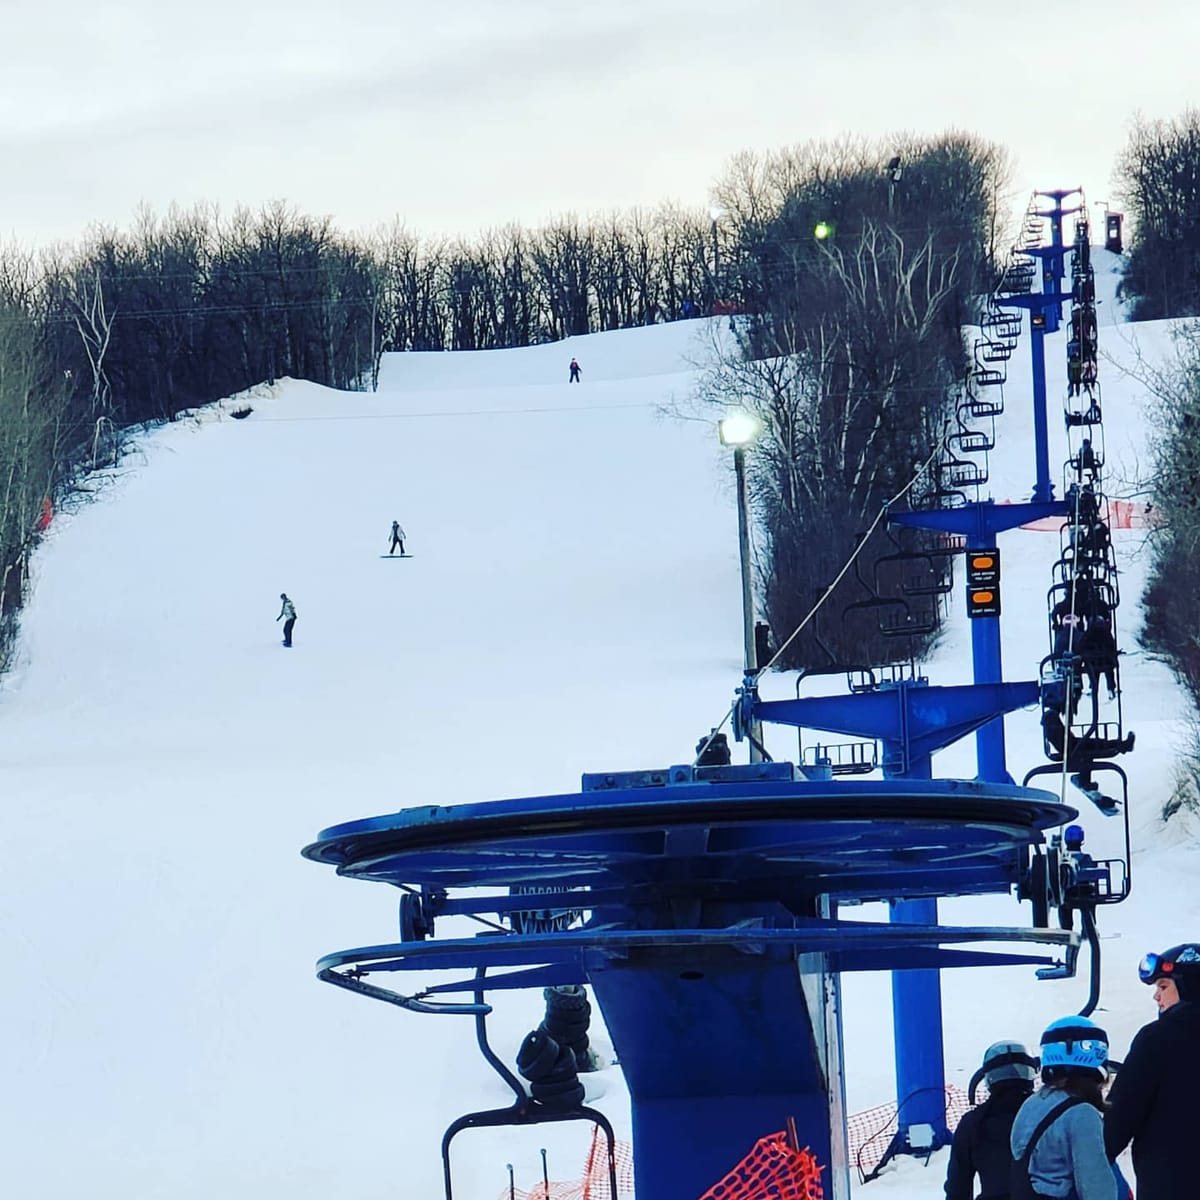 Canadian Ski Resort Announces It Won’t Open Next Winter Due To Drought